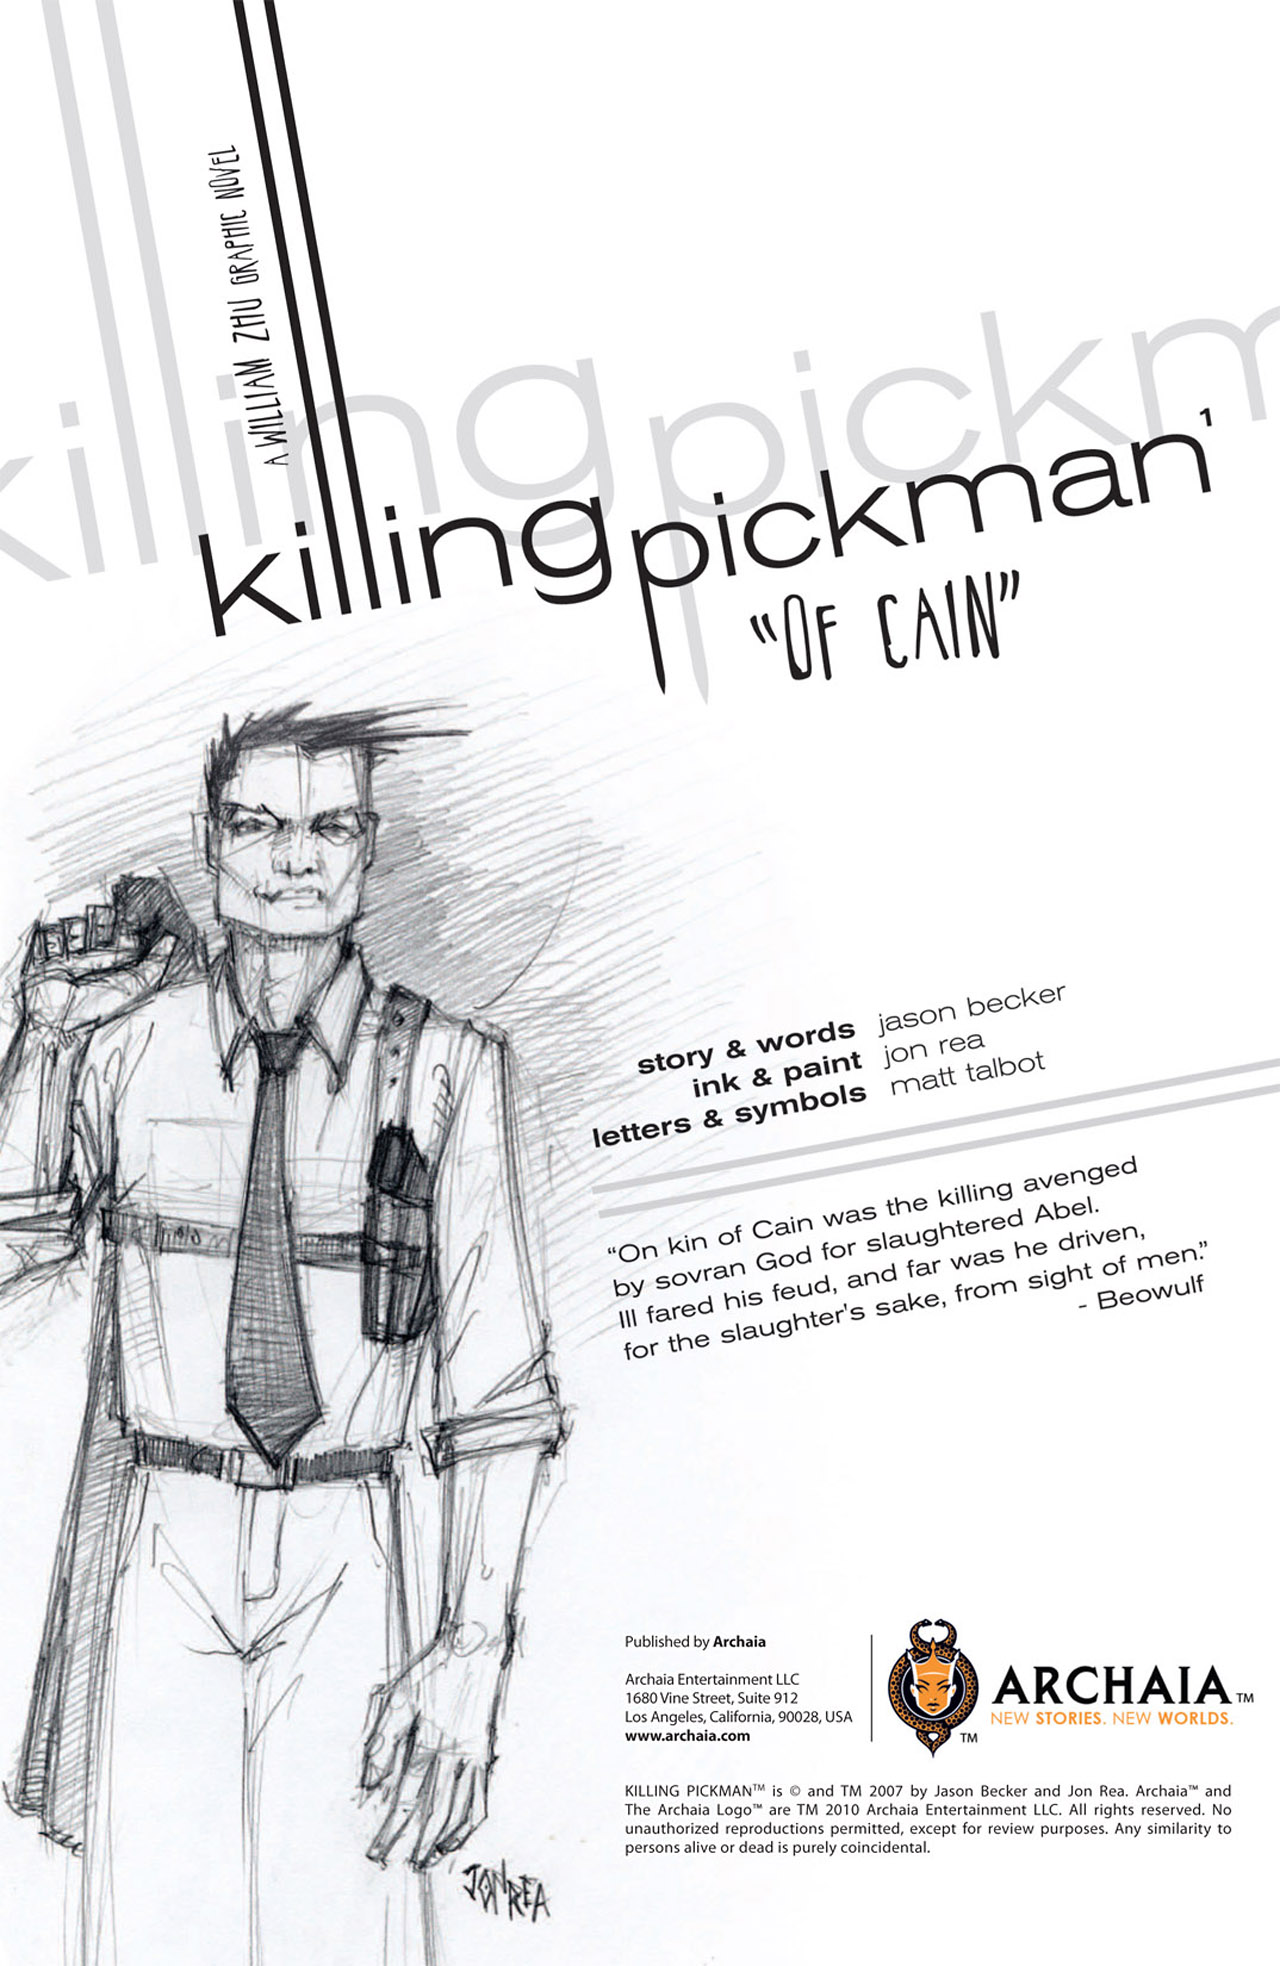 Killing Pickman 1 - Of Cain